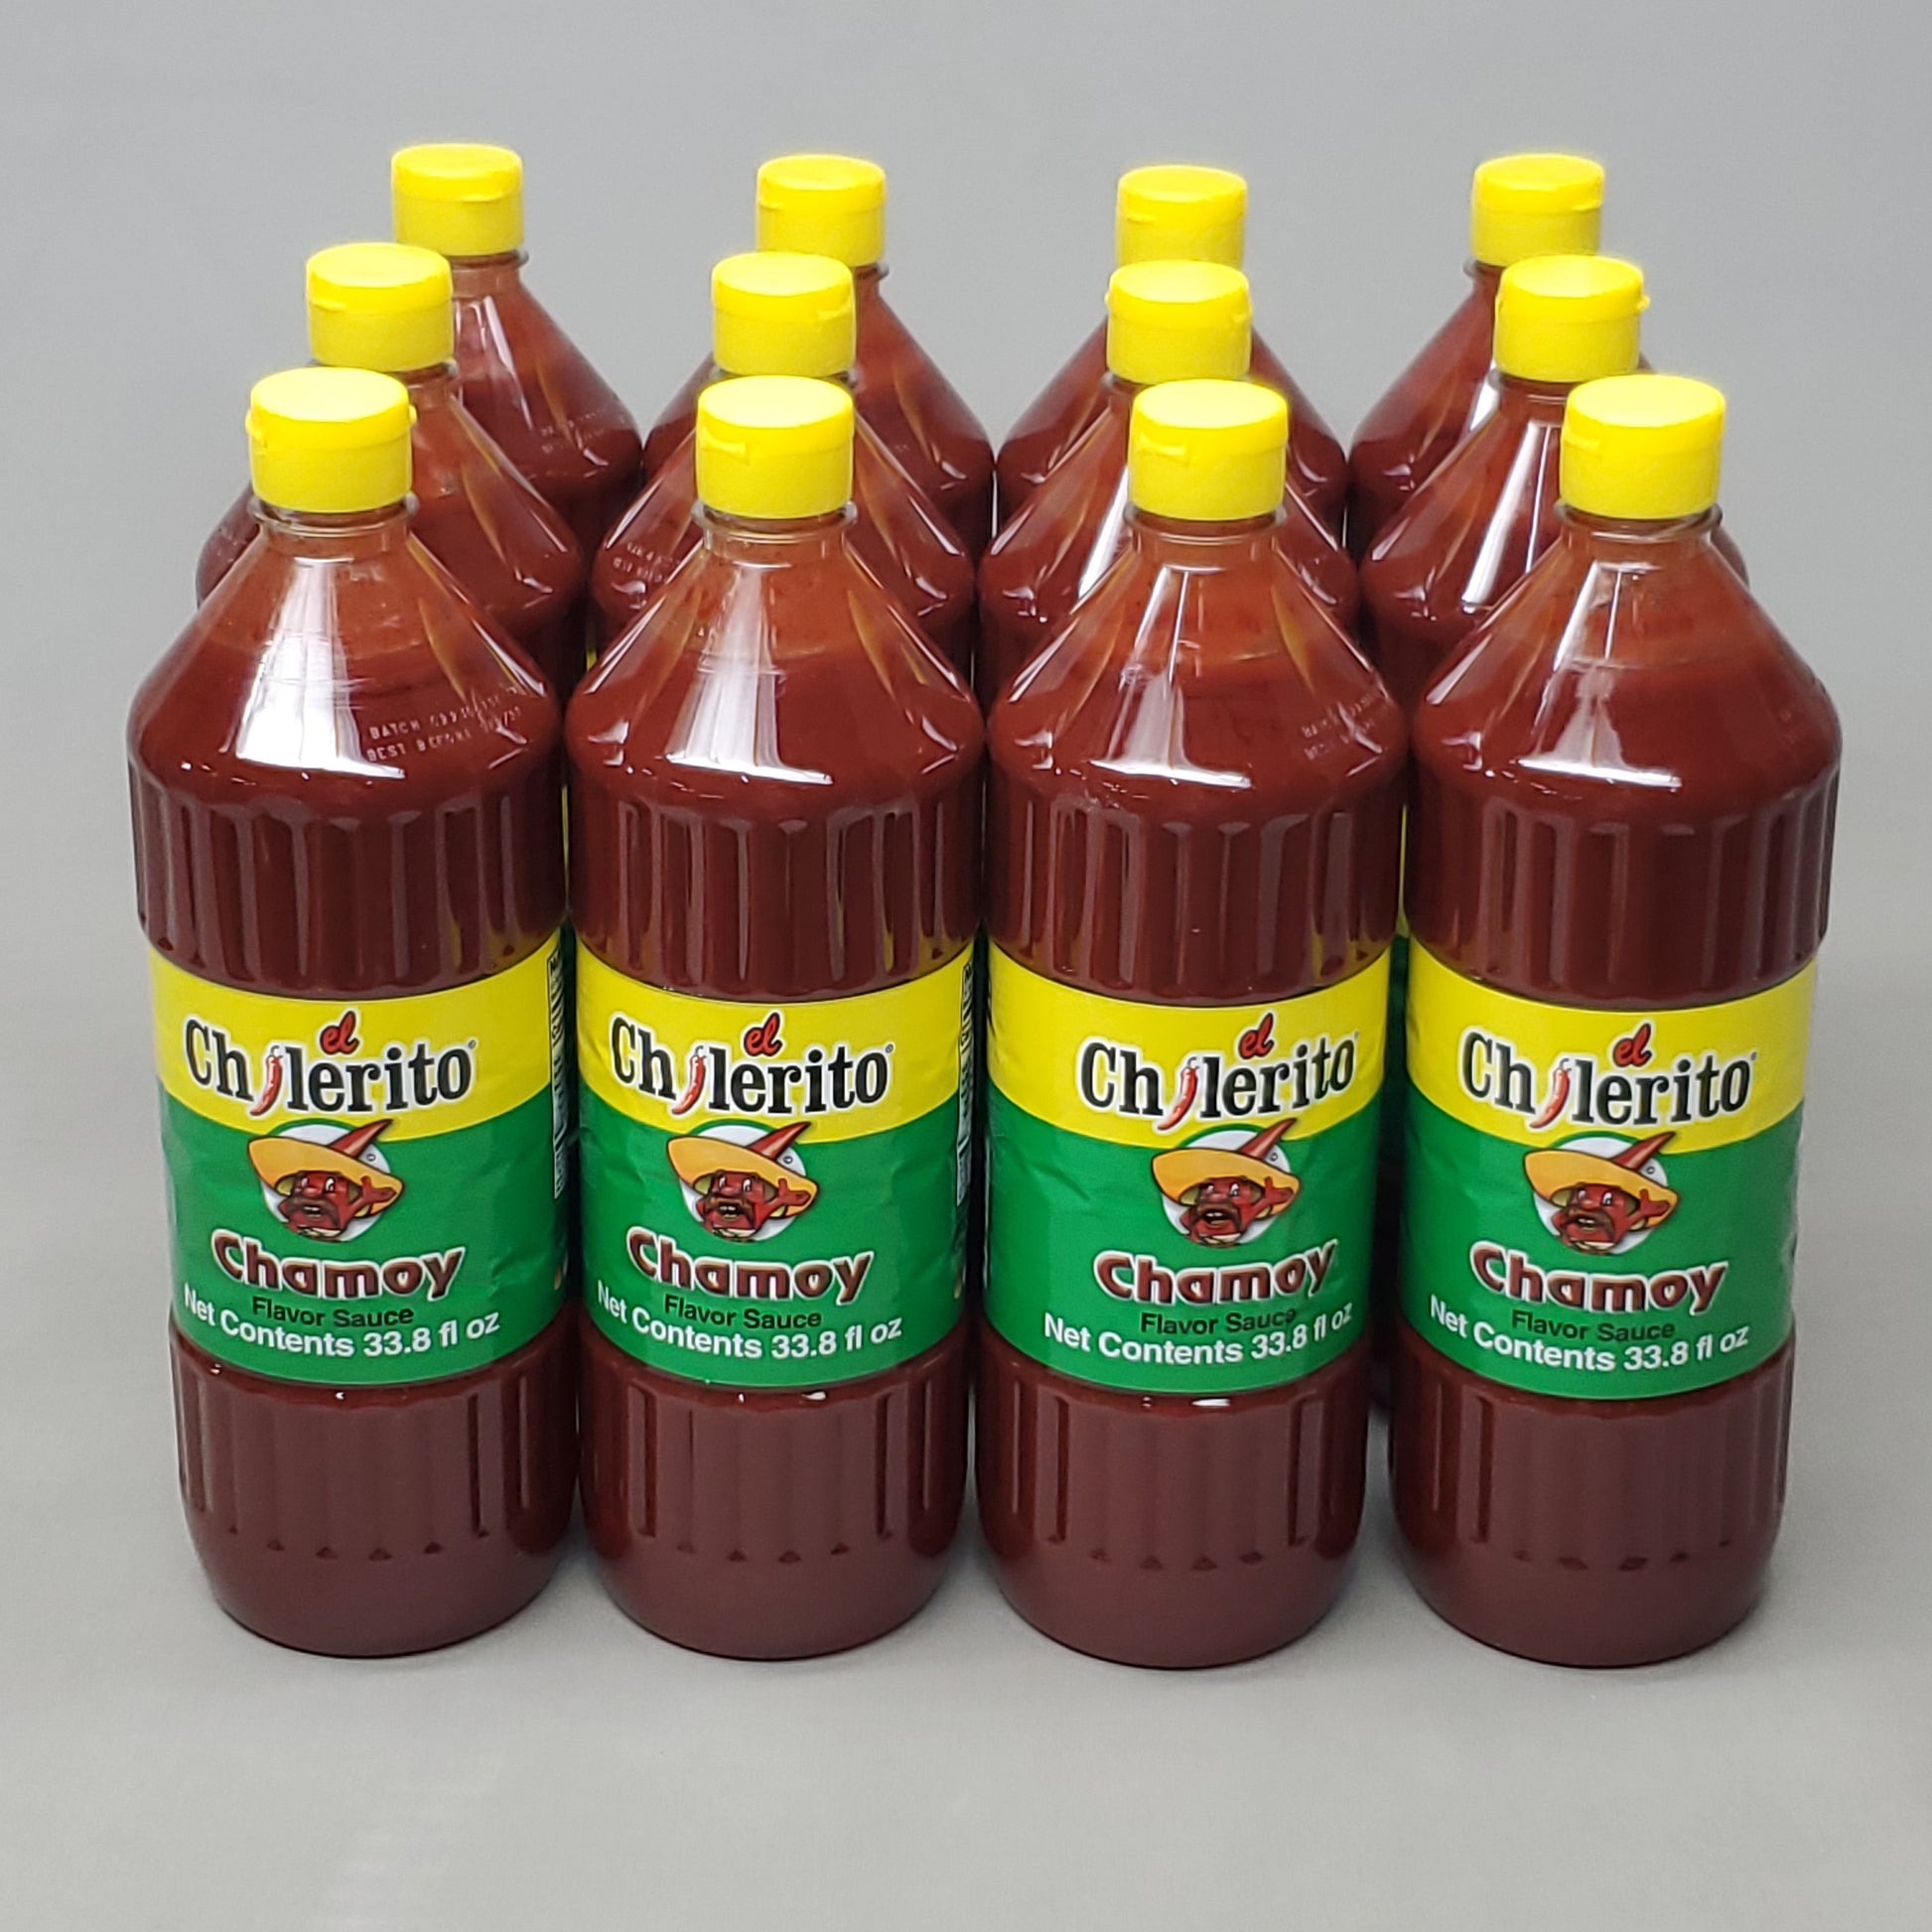 El Chilerito Chamoy Flavor Sauce